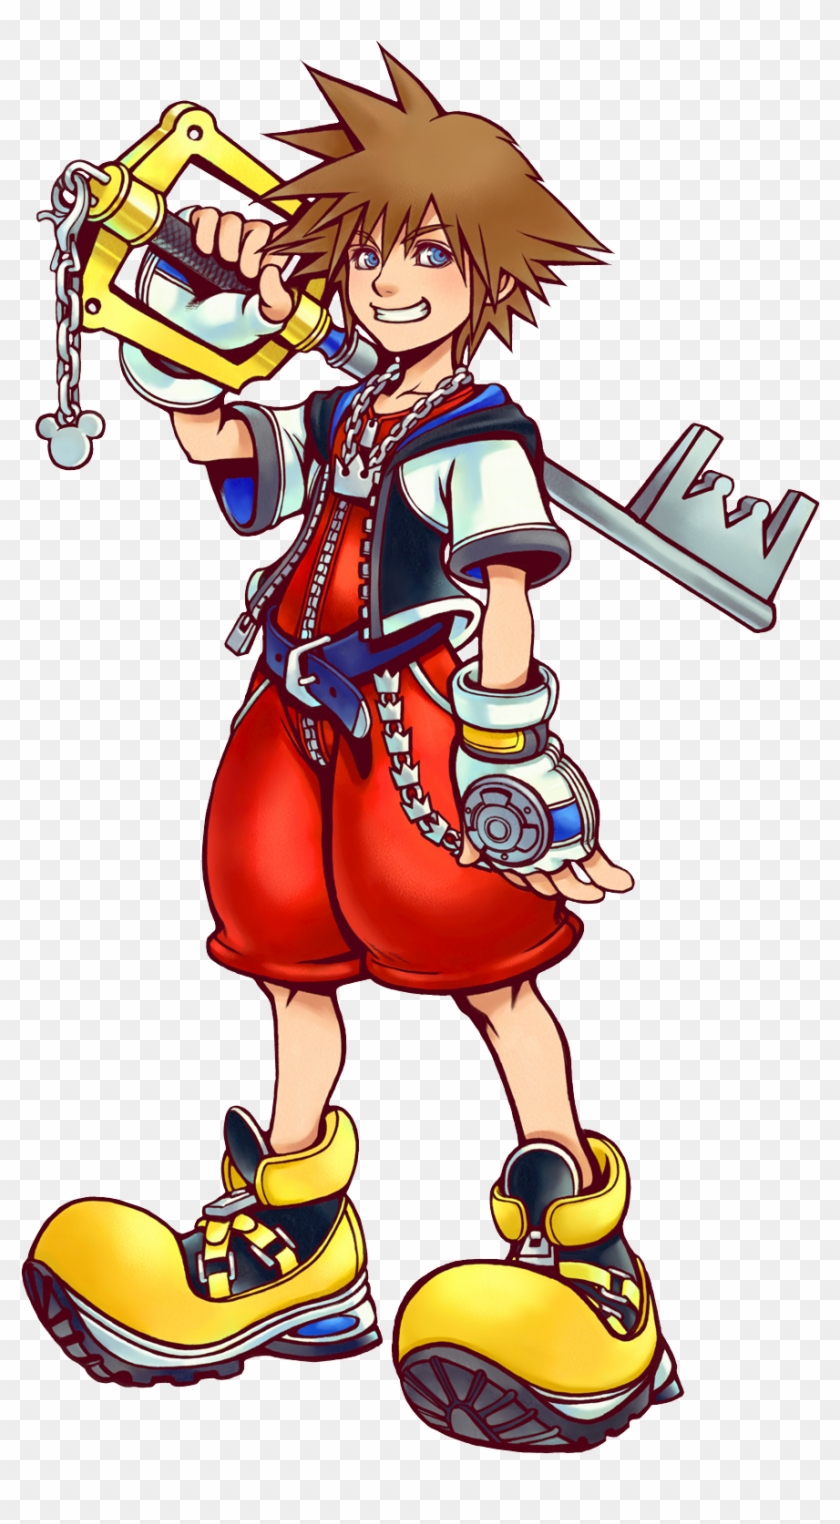 Sora Kh - Kingdom Hearts Sora Crown Necklace #327528